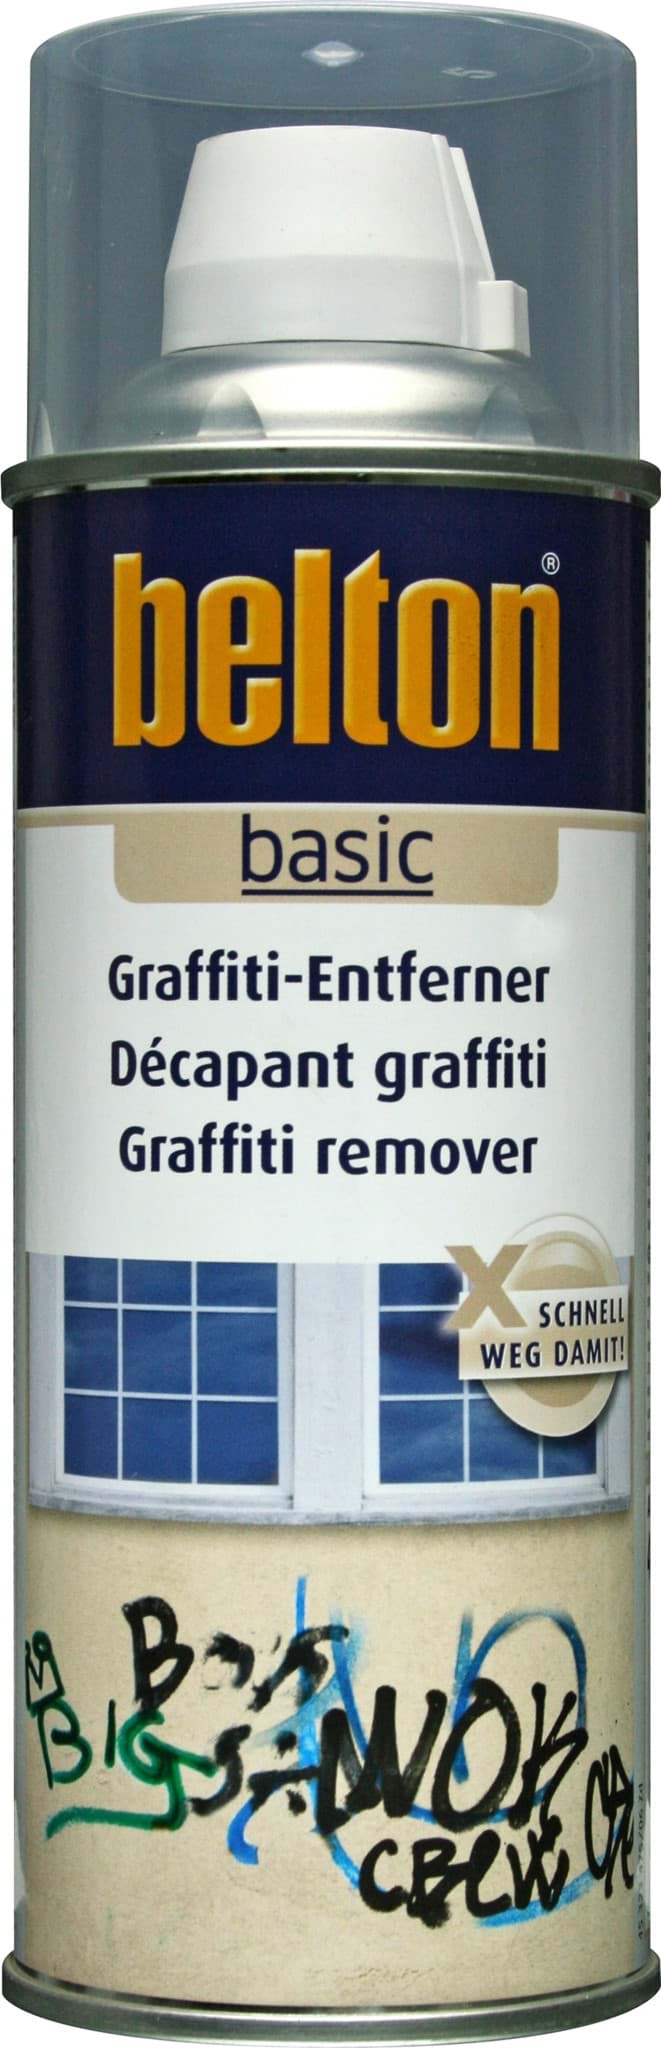 Picture of Belton basic Graffiti-Entferner